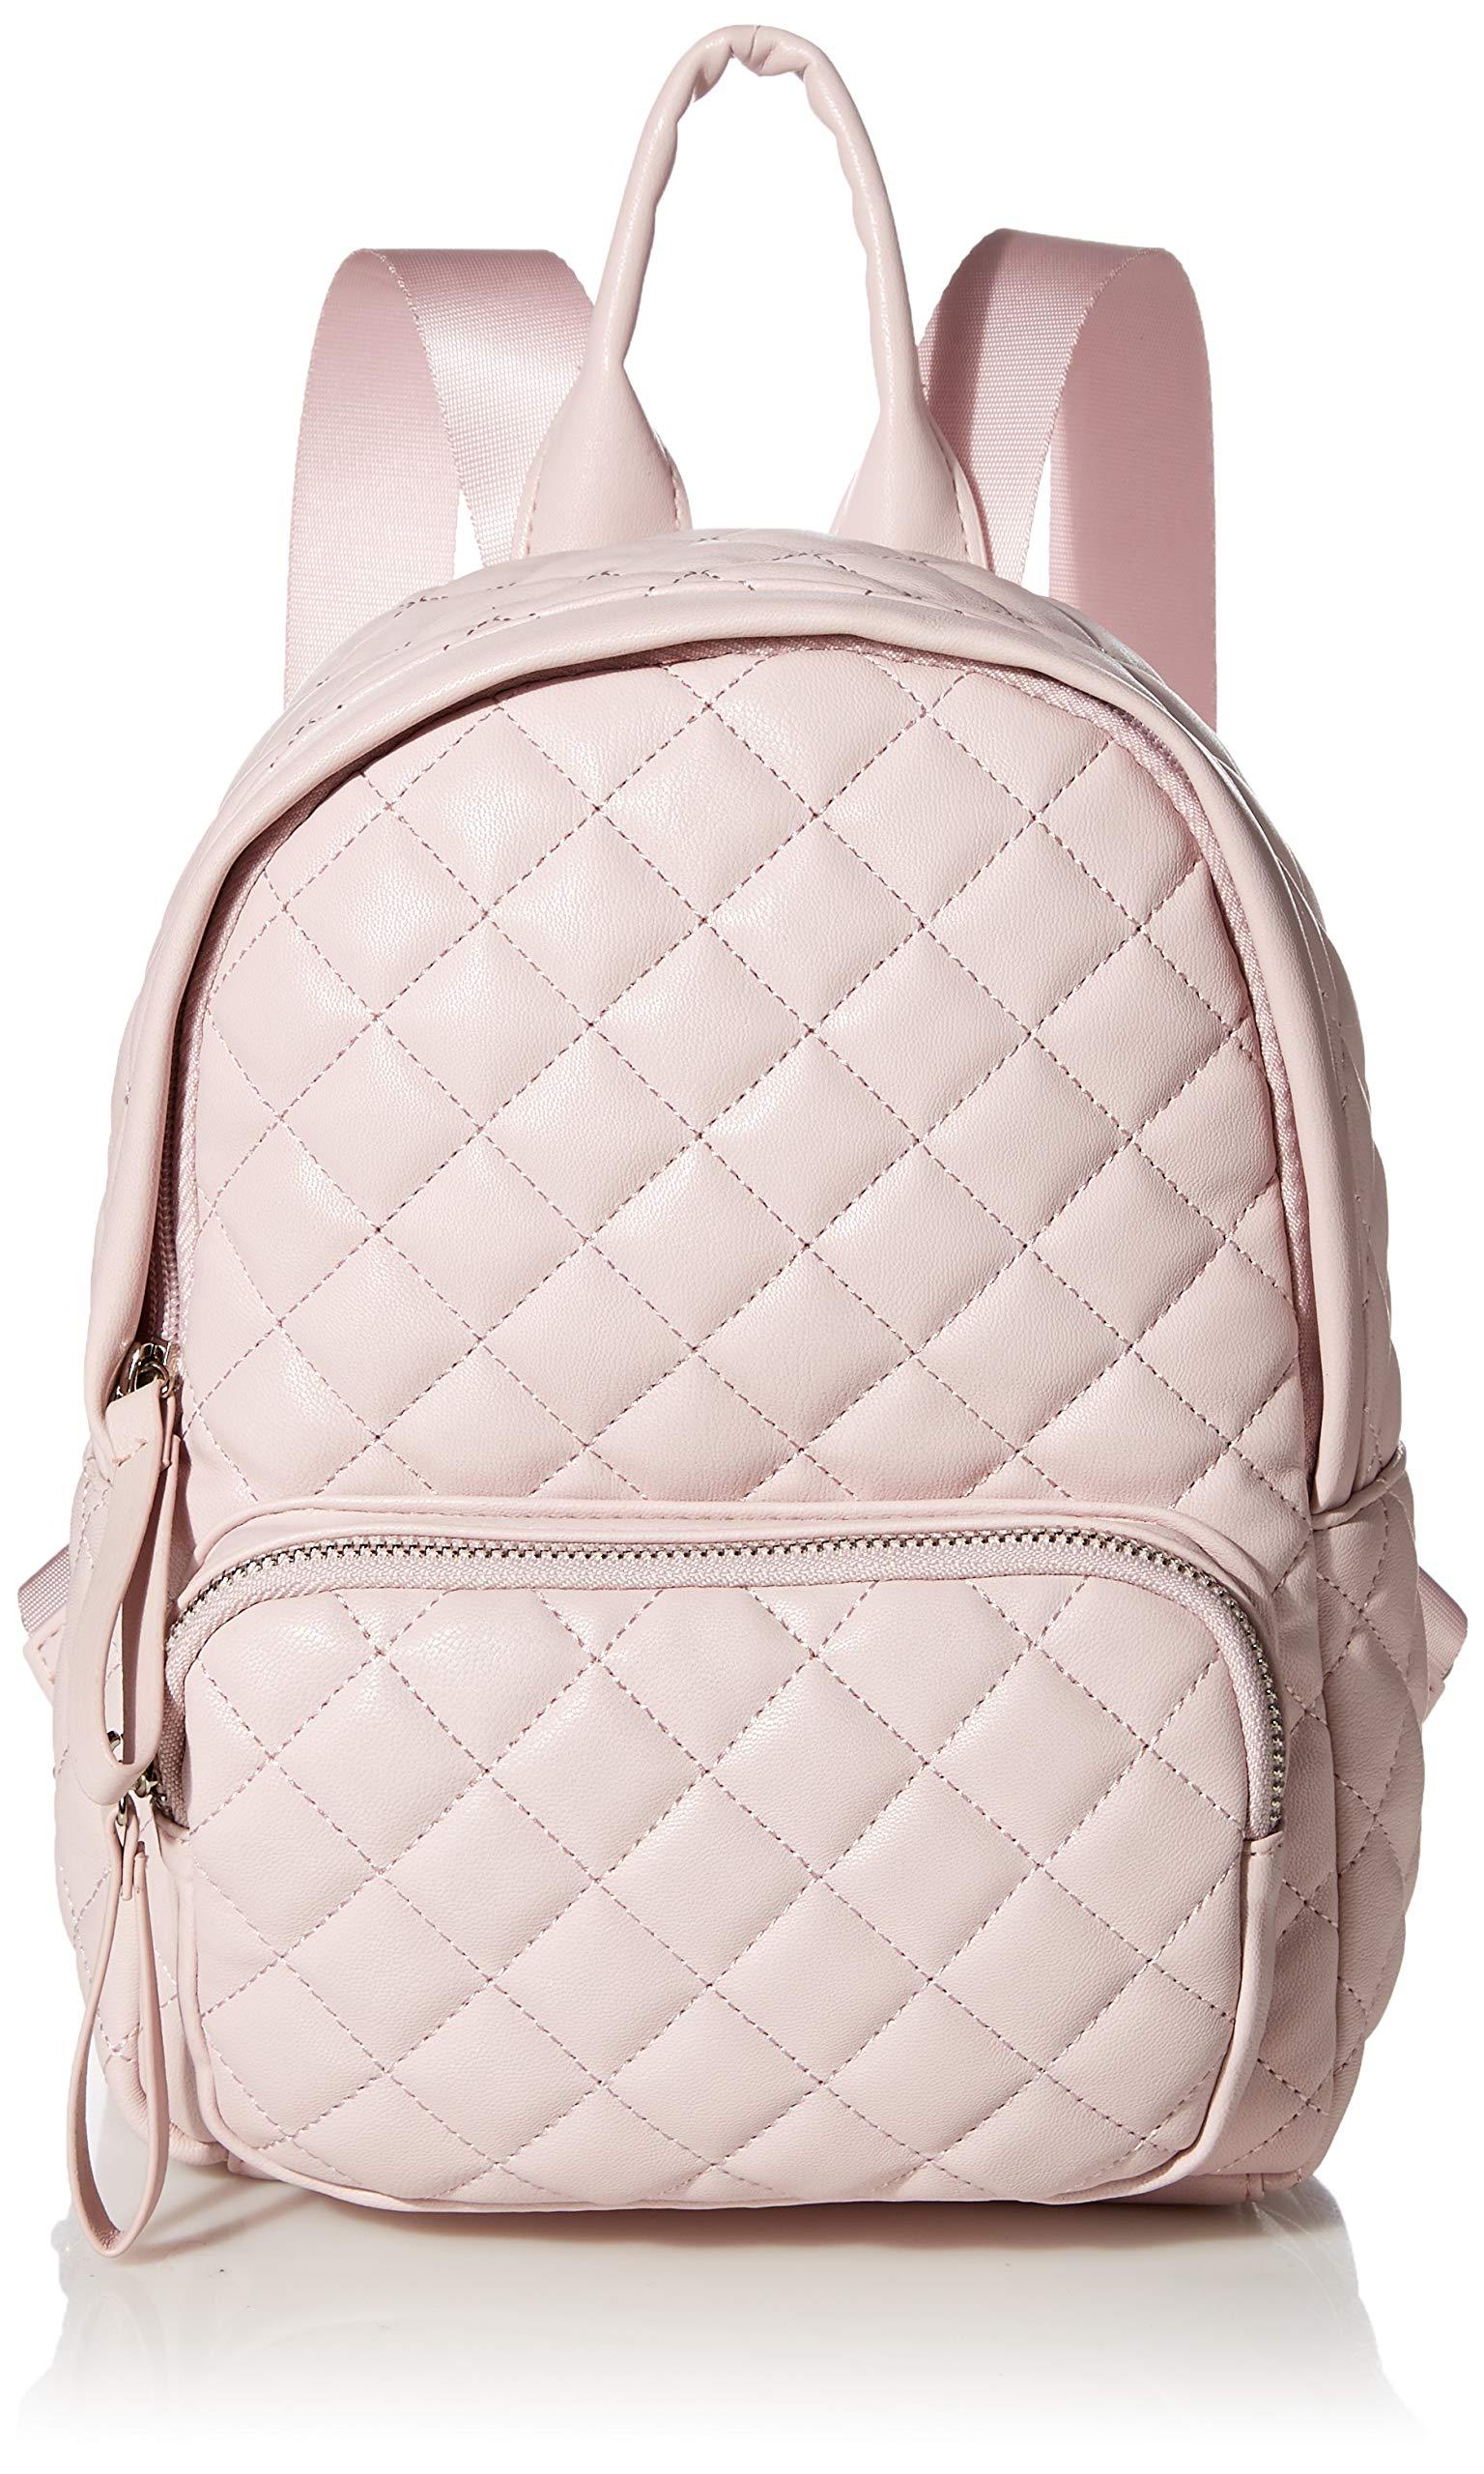 Madden Girl Mini Backpack in Blush (Black) - Save 20% - Lyst